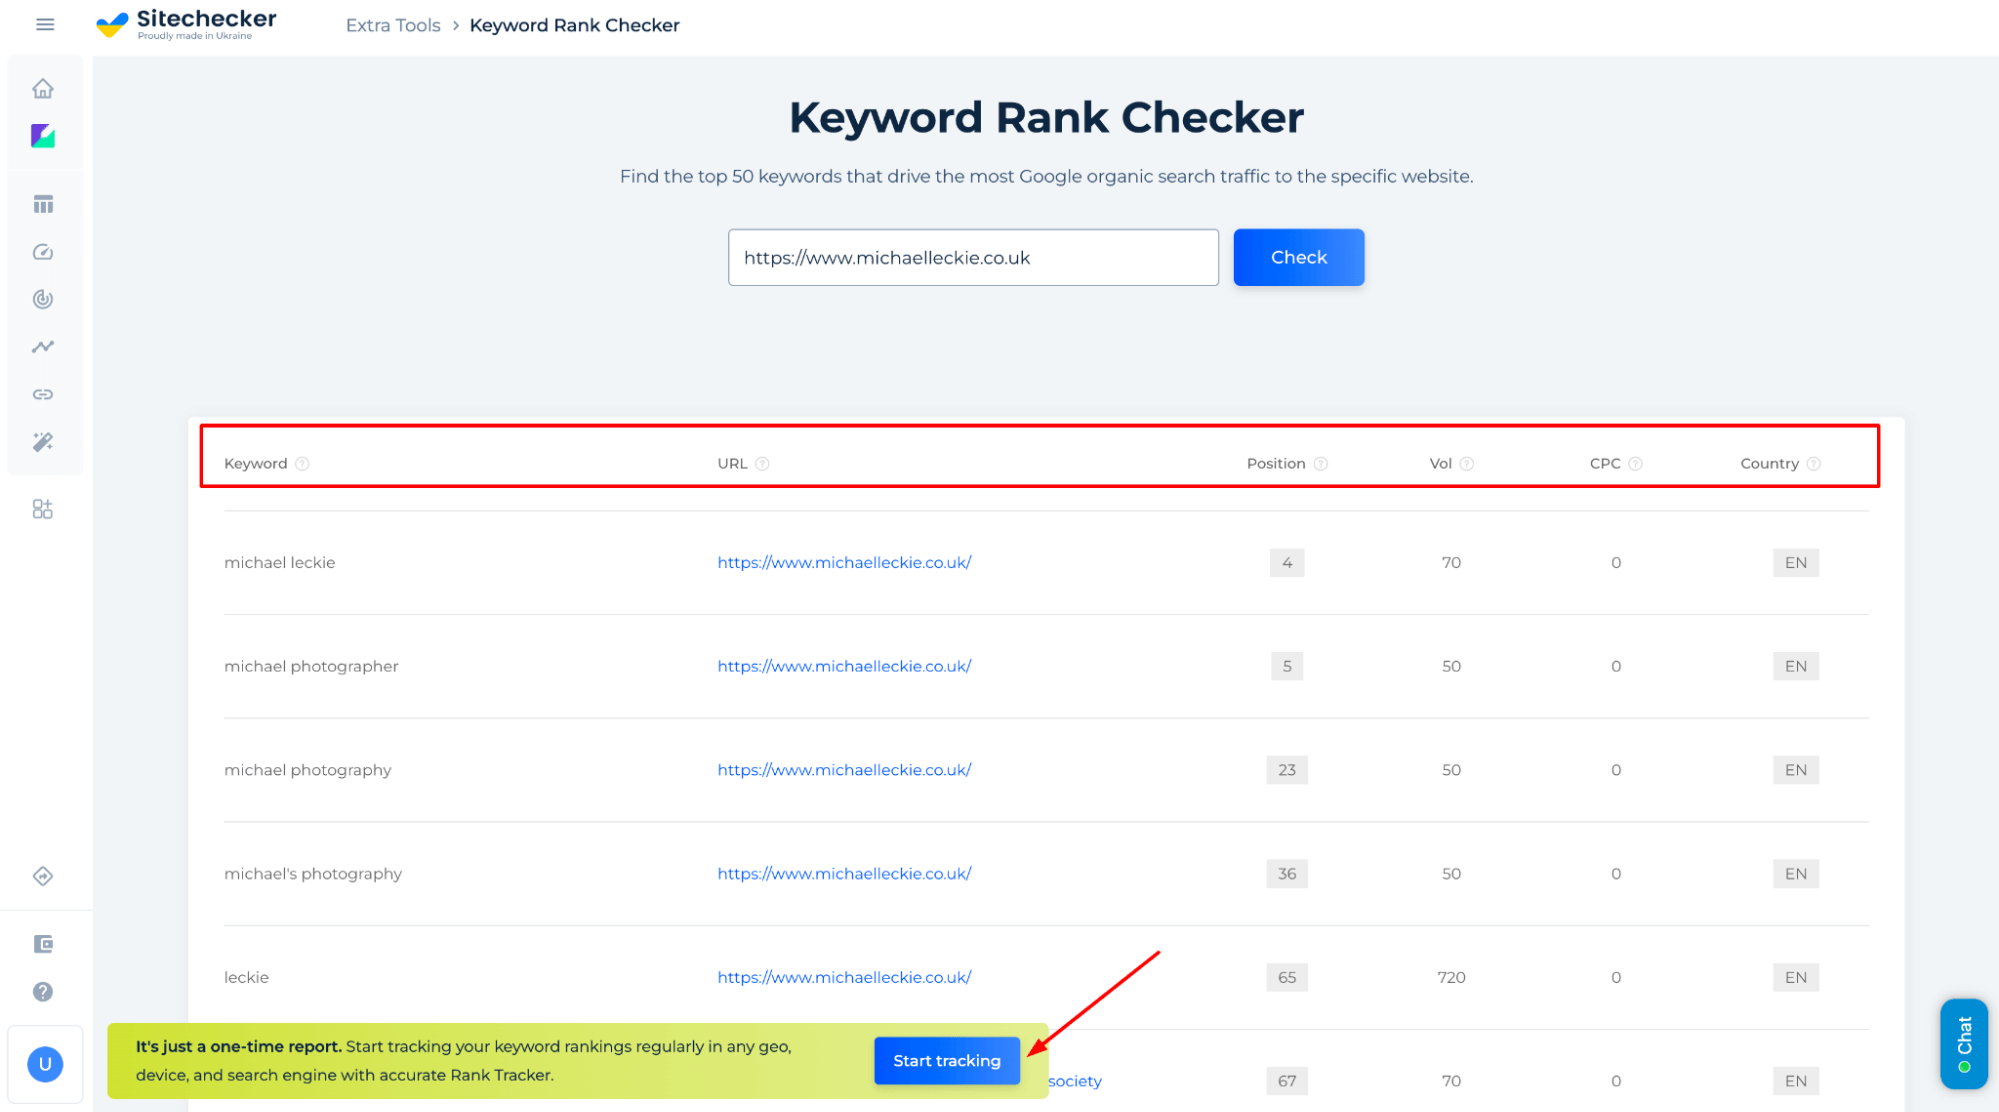 Keyword Rank Checker Results